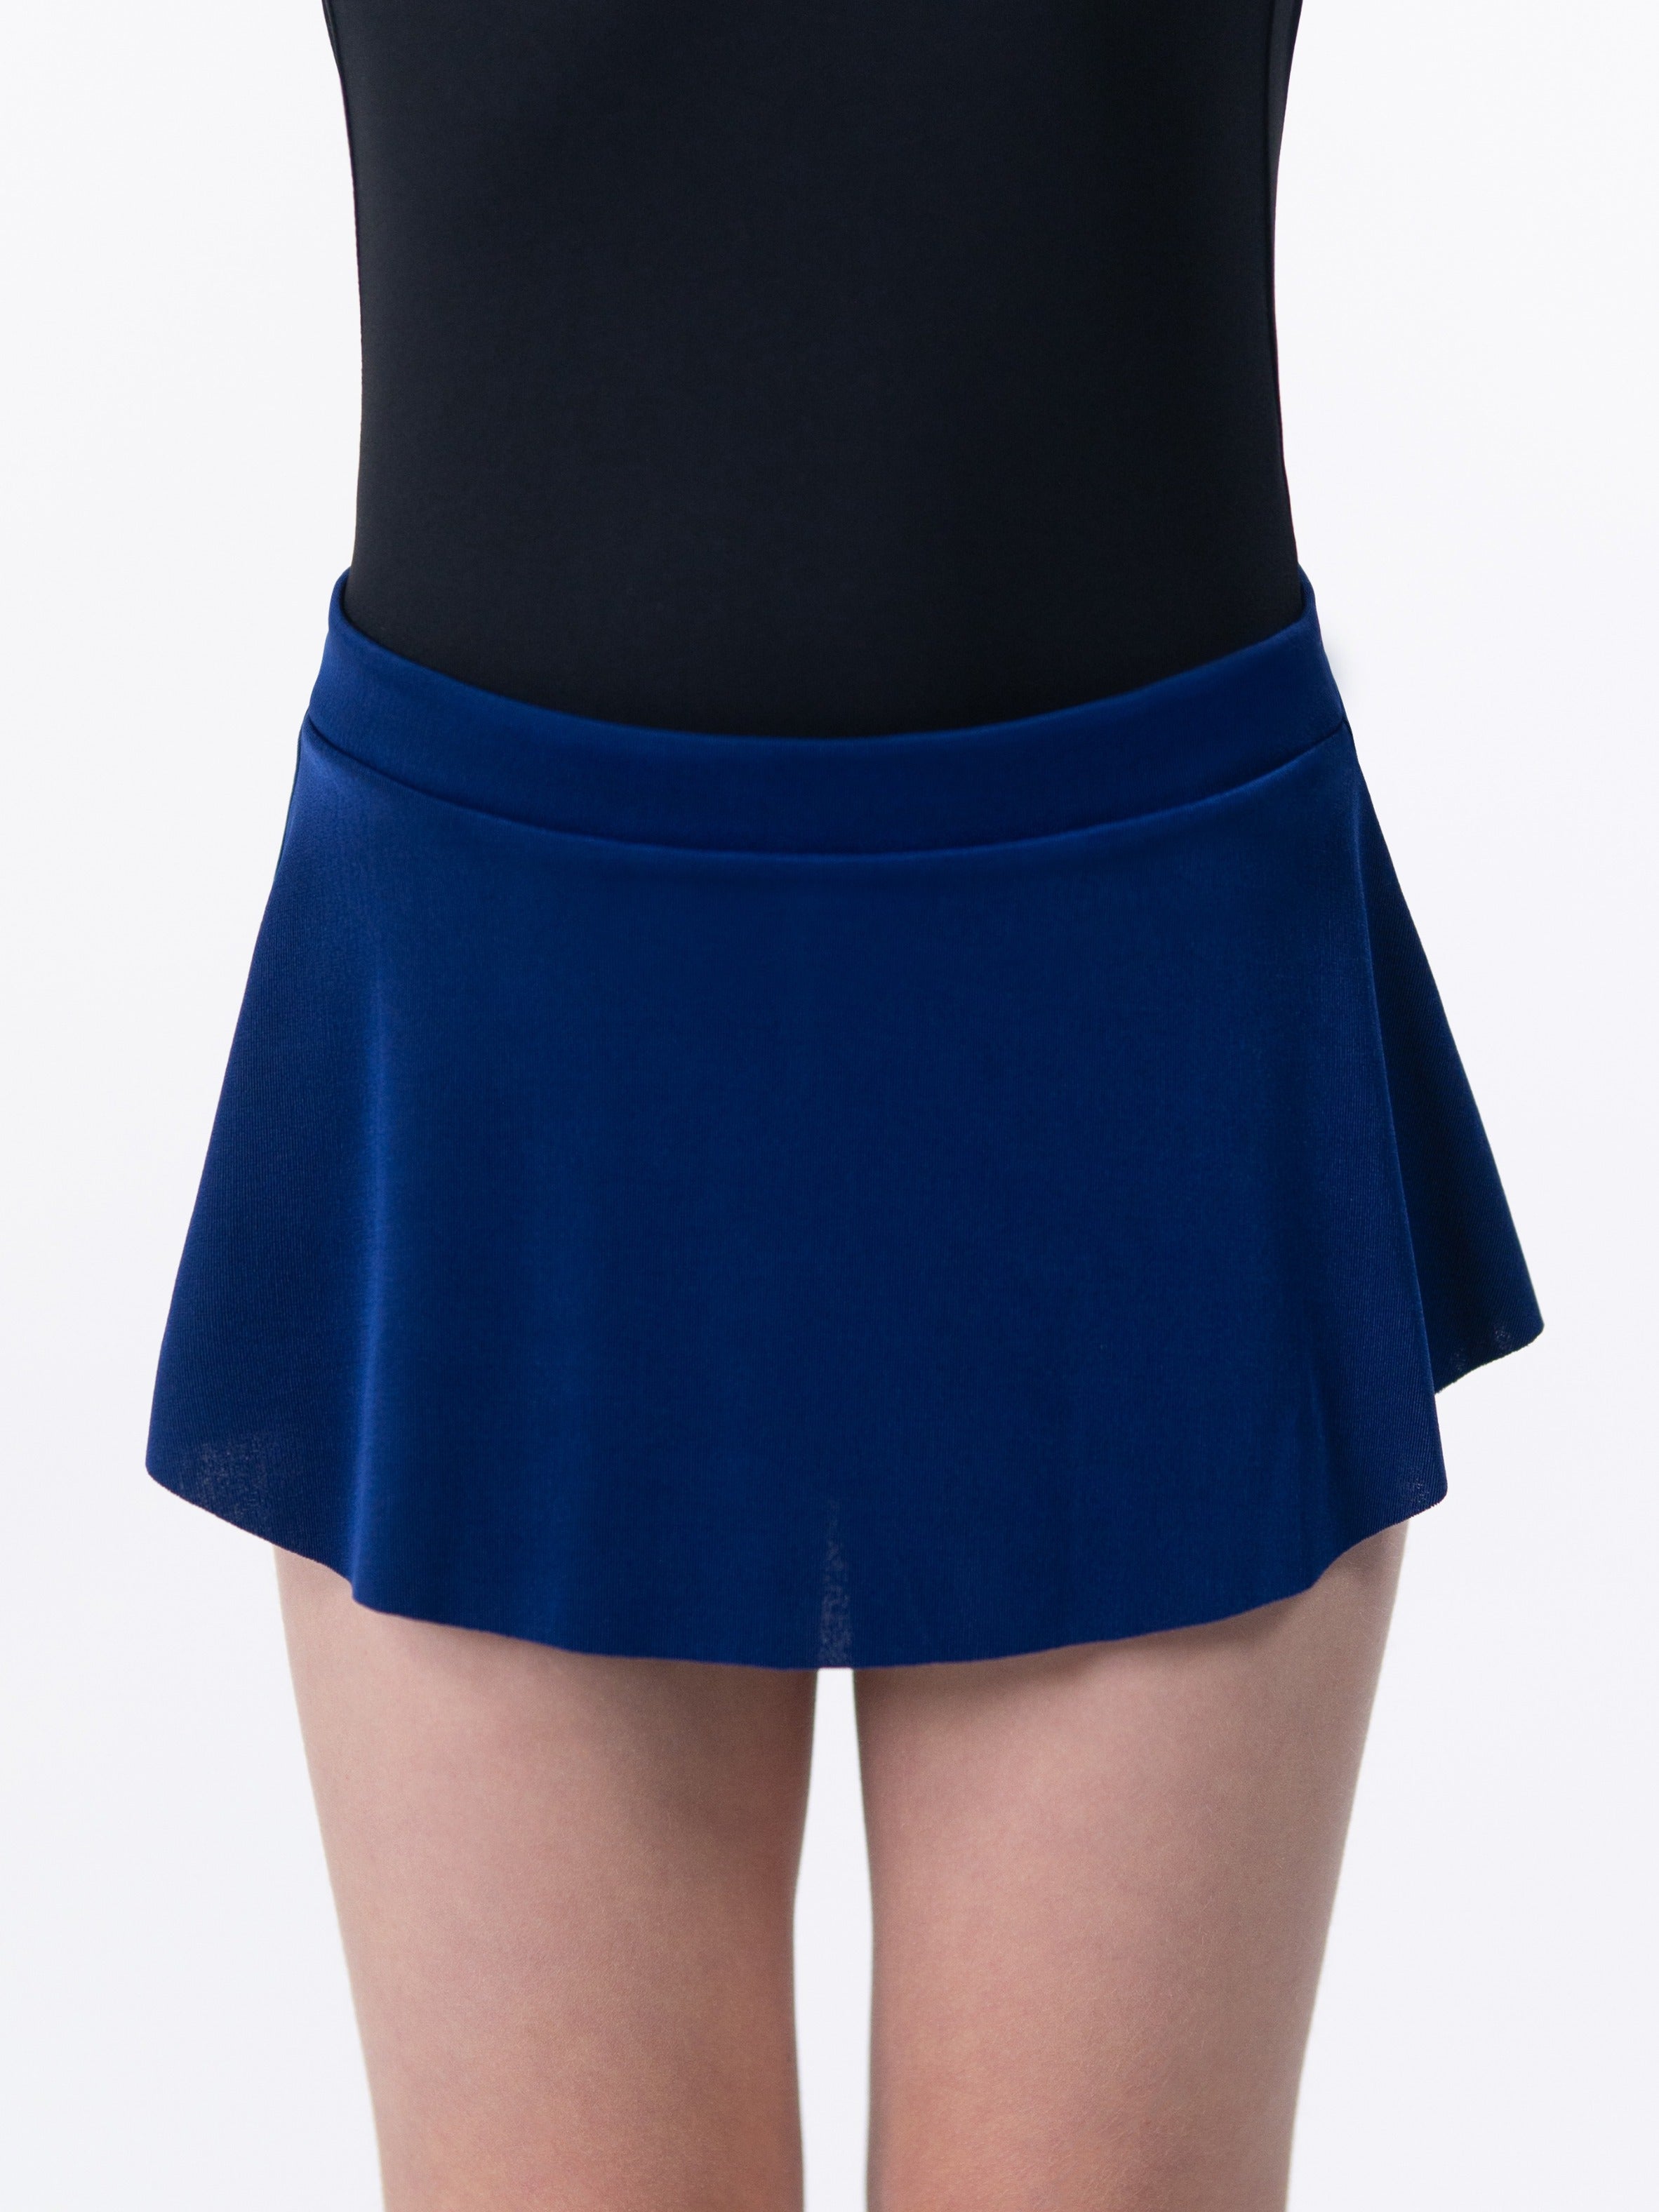 Low High Slinky – Dance Skirt Suffolk Child Pull-on 1006C